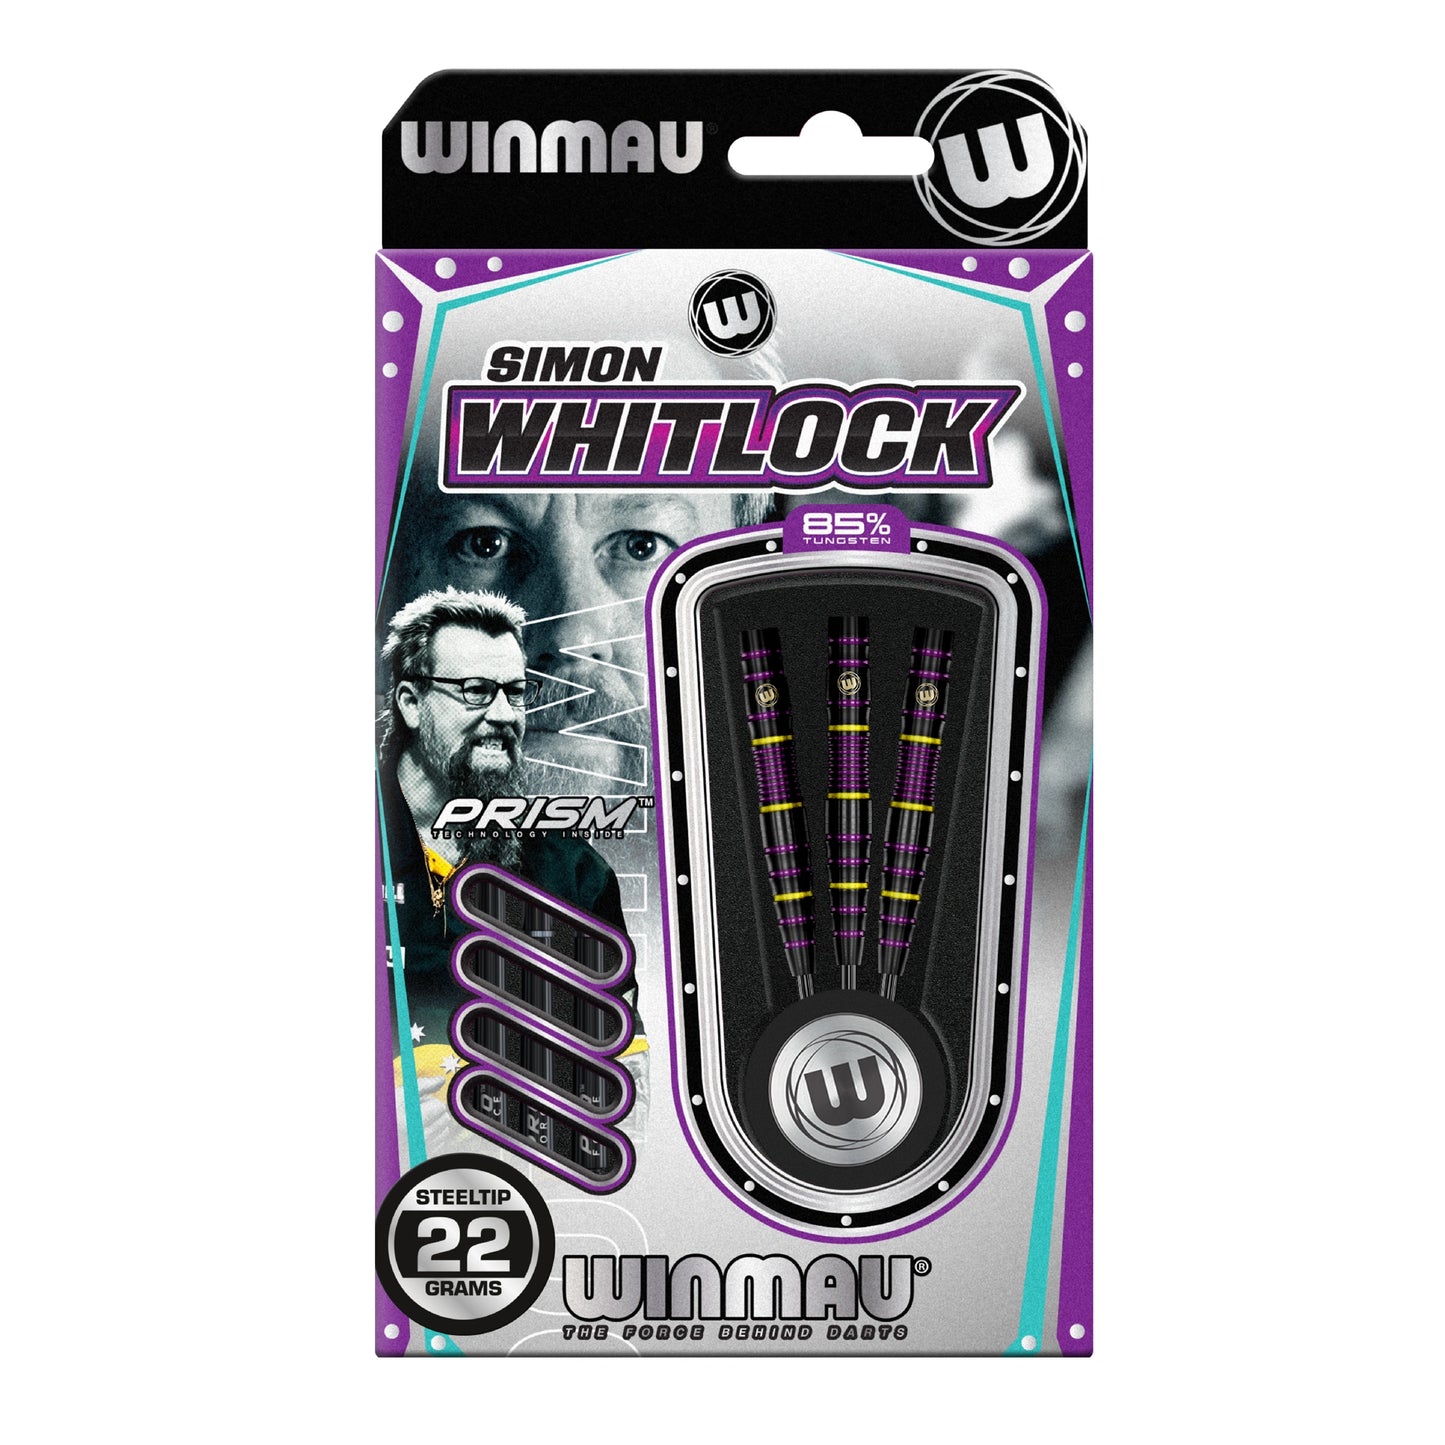 Winmau Simon Whitlock 85% Tungsten Darts 22G